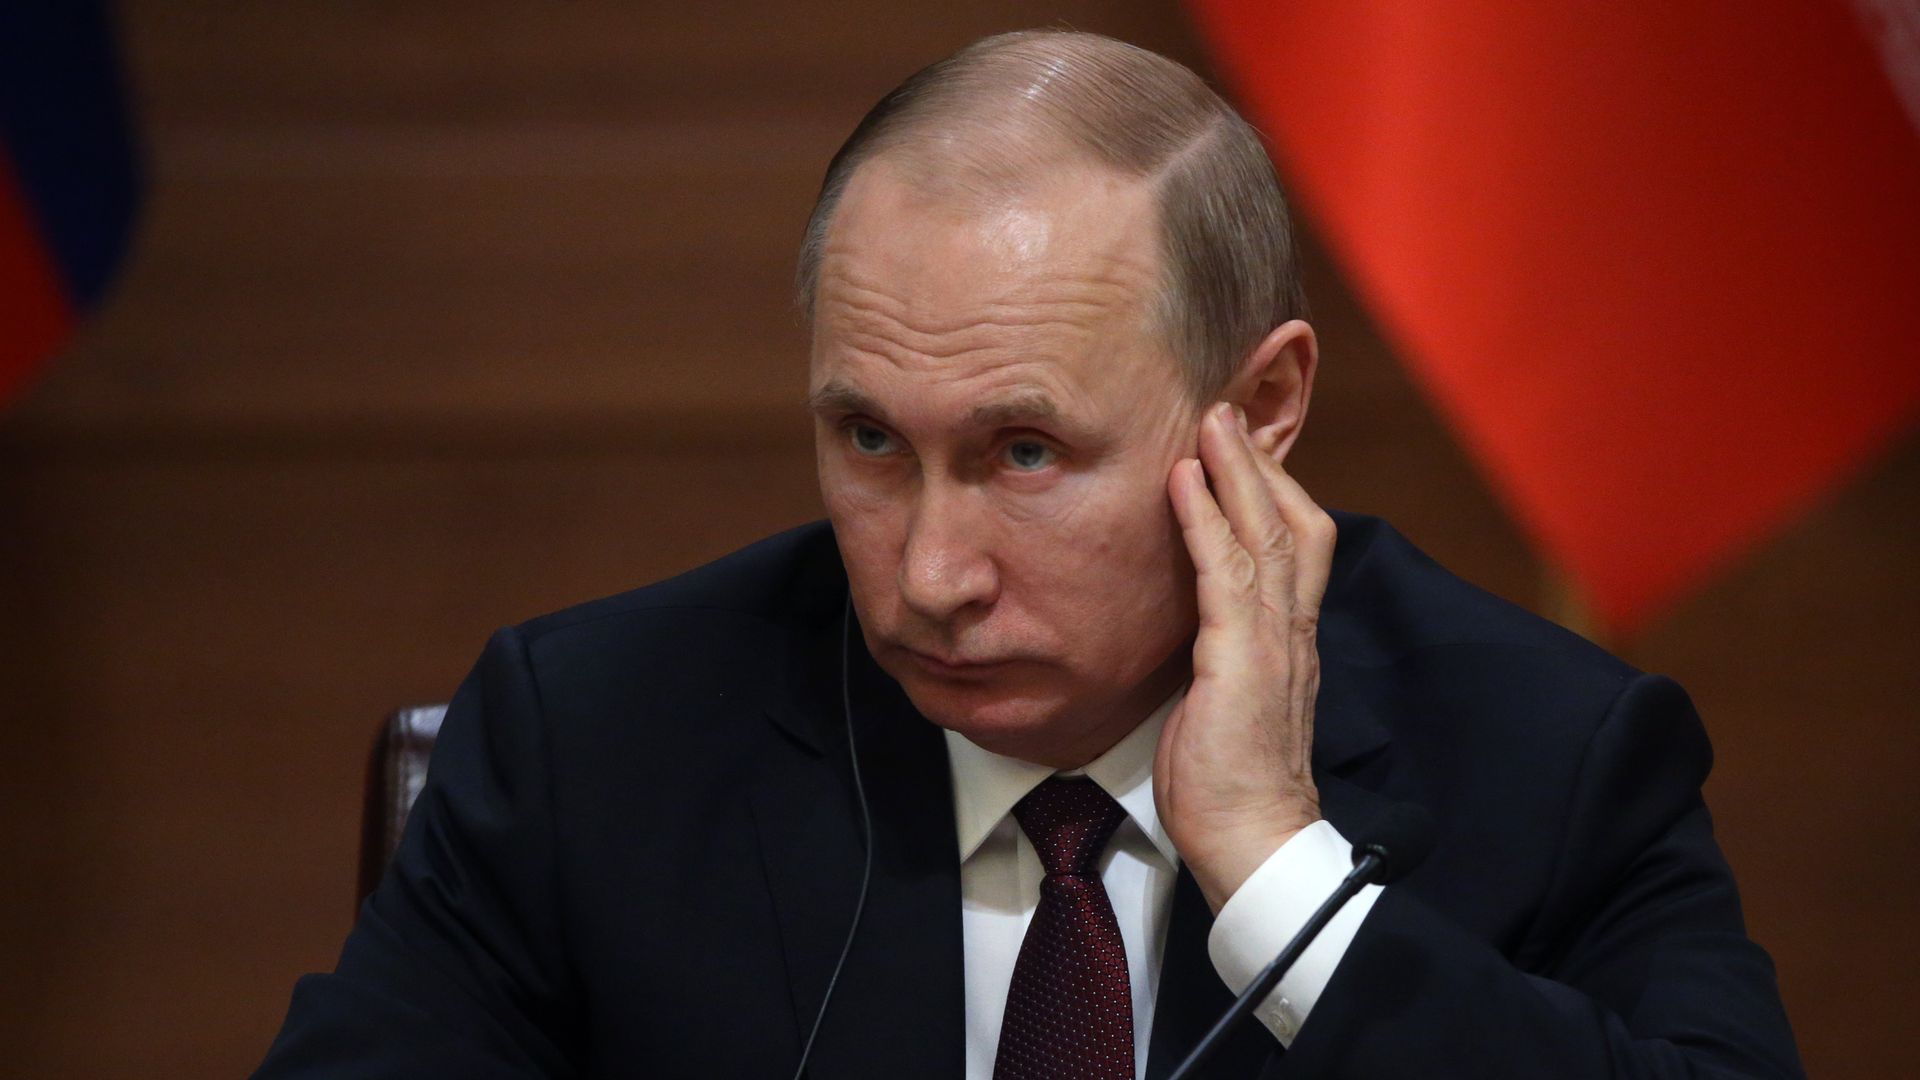 Vladimir Putin listens to a headset.